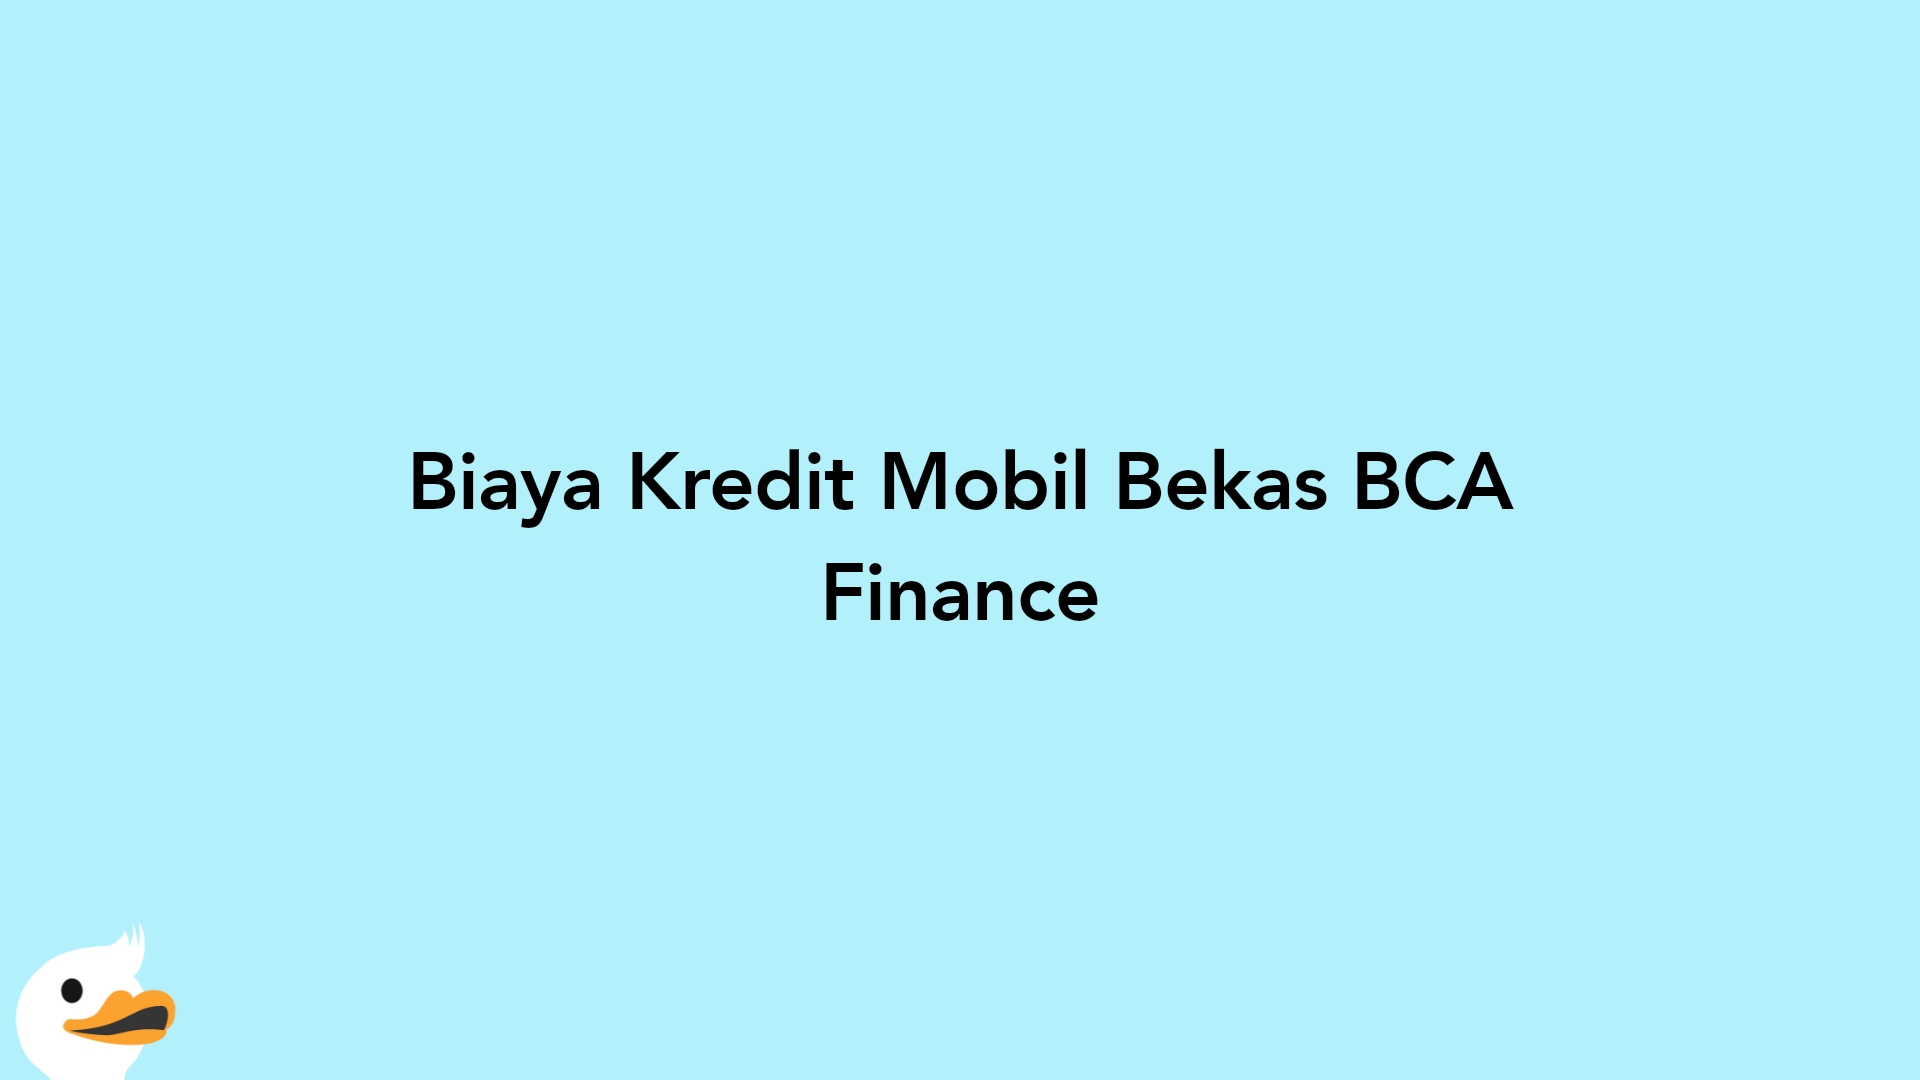 Biaya Kredit Mobil Bekas BCA Finance